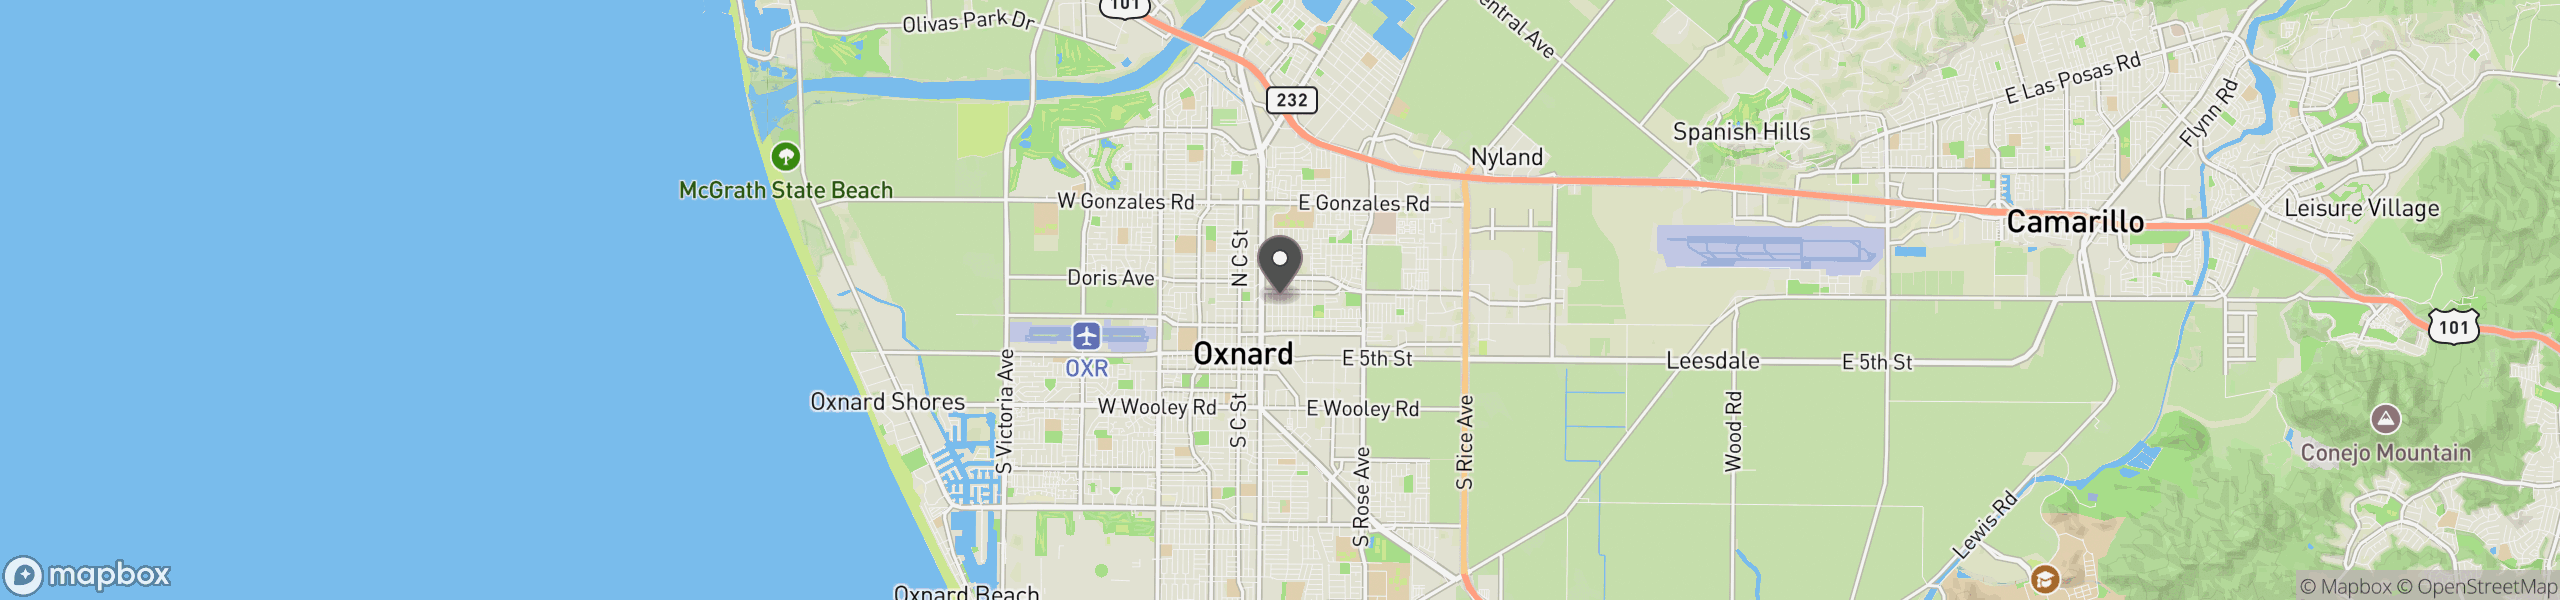 Oxnard, CA 93030